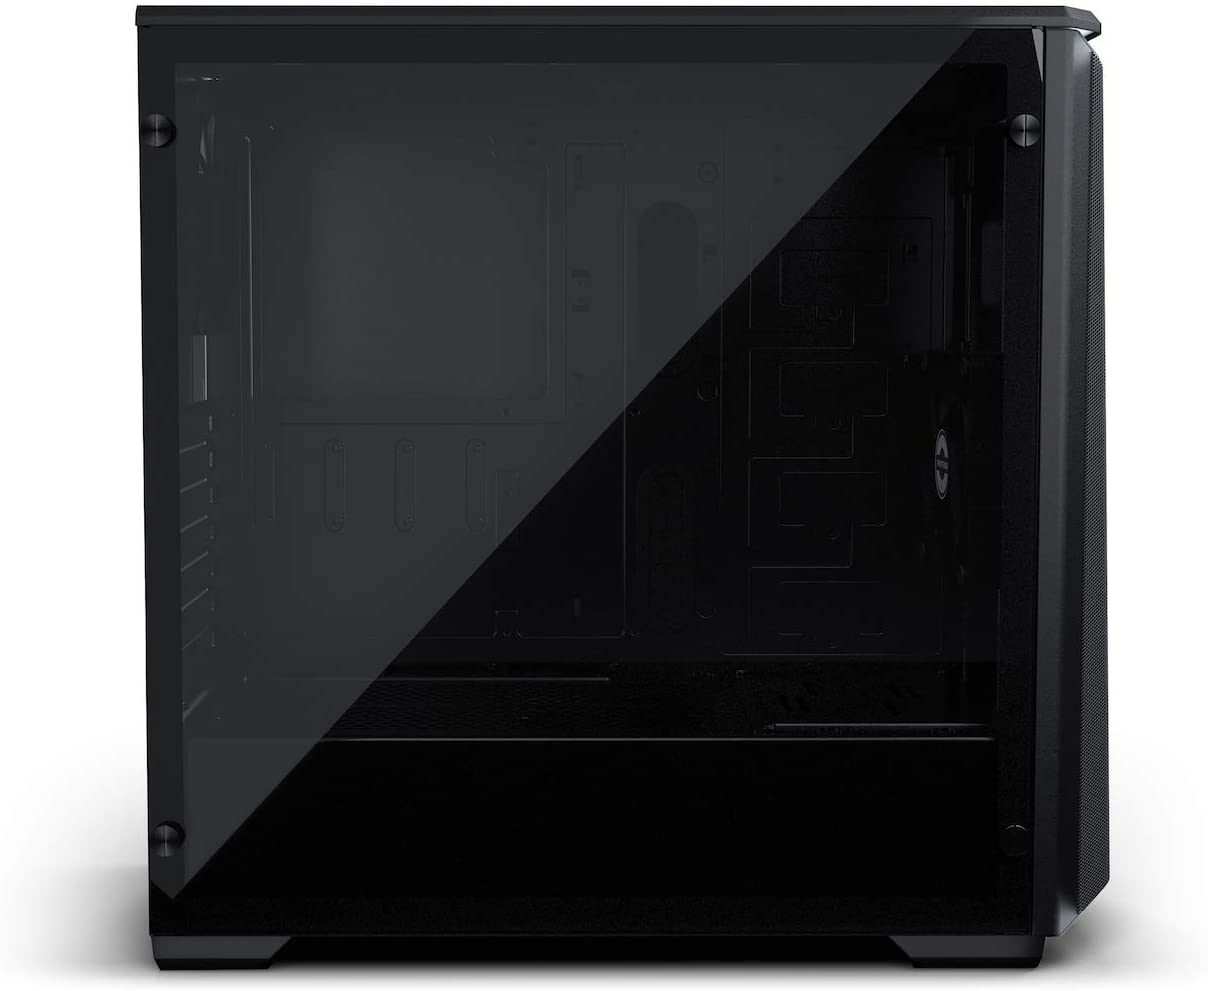 Phanteks Eclipse P400A ATX Mid-Tower (PH-EC400ATG_BK01), Mesh Front Panel, Tempered Glass, Fan Controller, Black